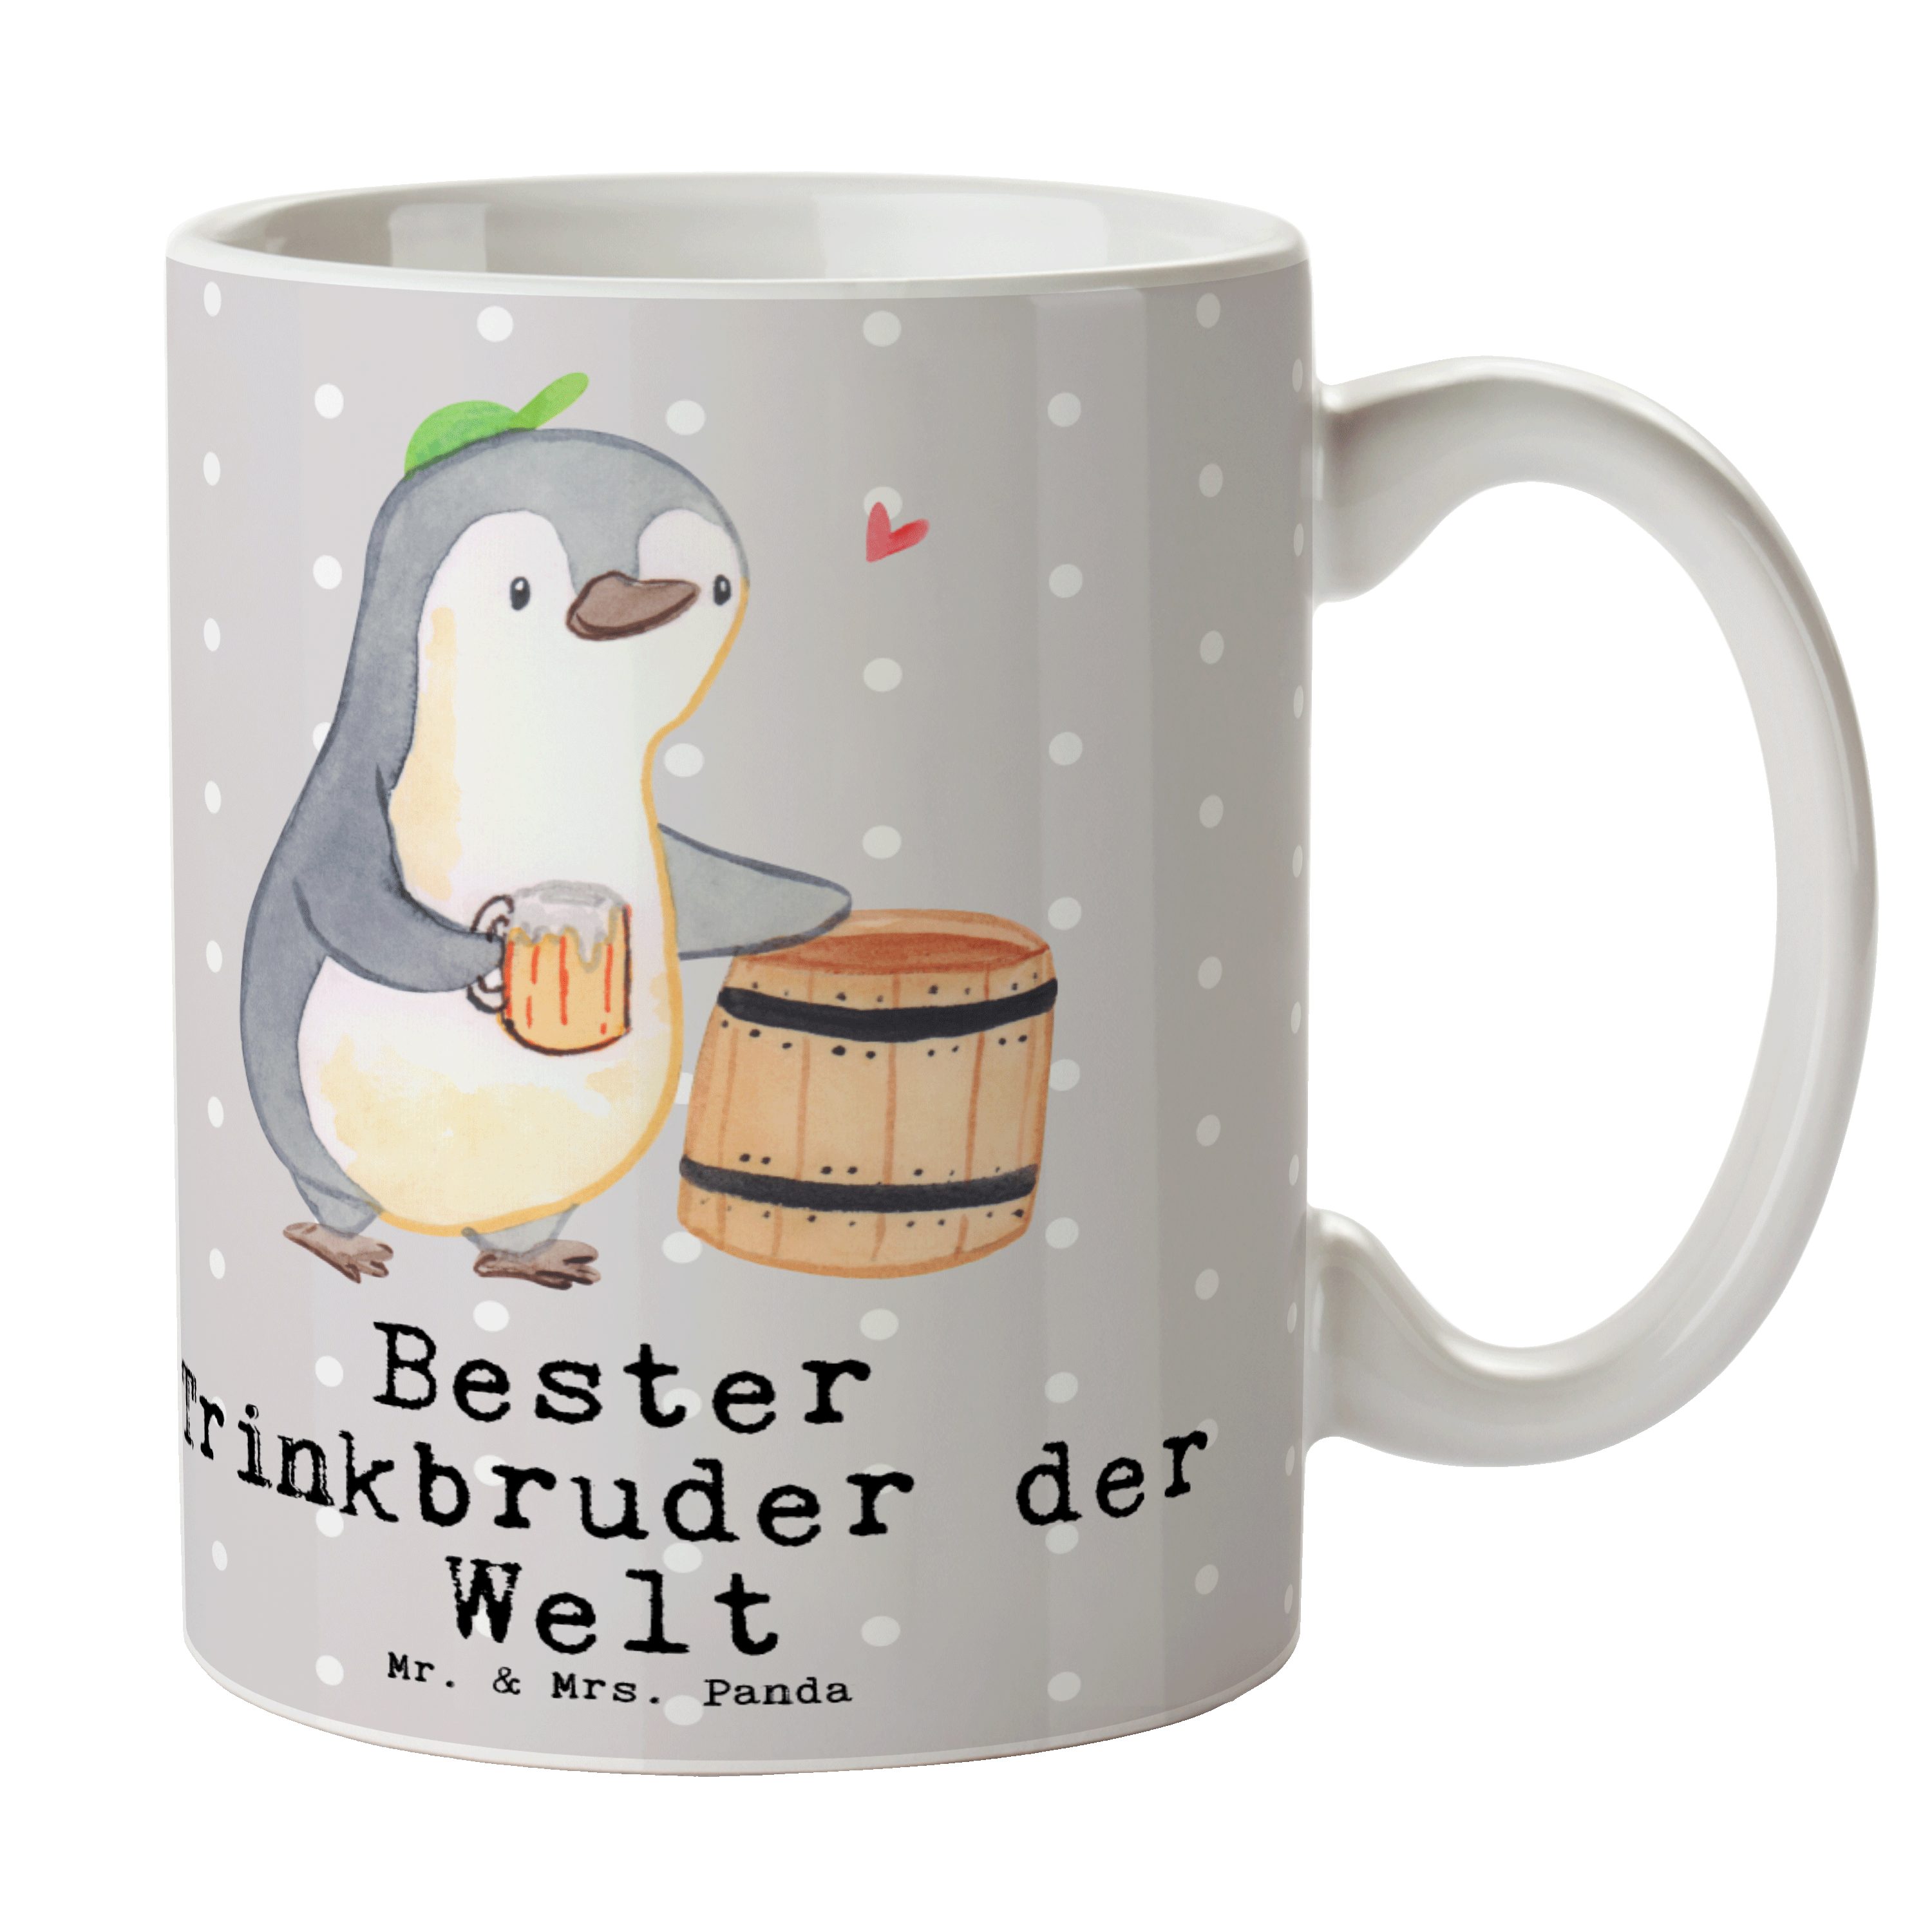 Pastell - Panda Pinguin & Mr. Geschenk, Mrs. Grau Trinkbruder Welt Keramik Bester Becher, - der Tasse